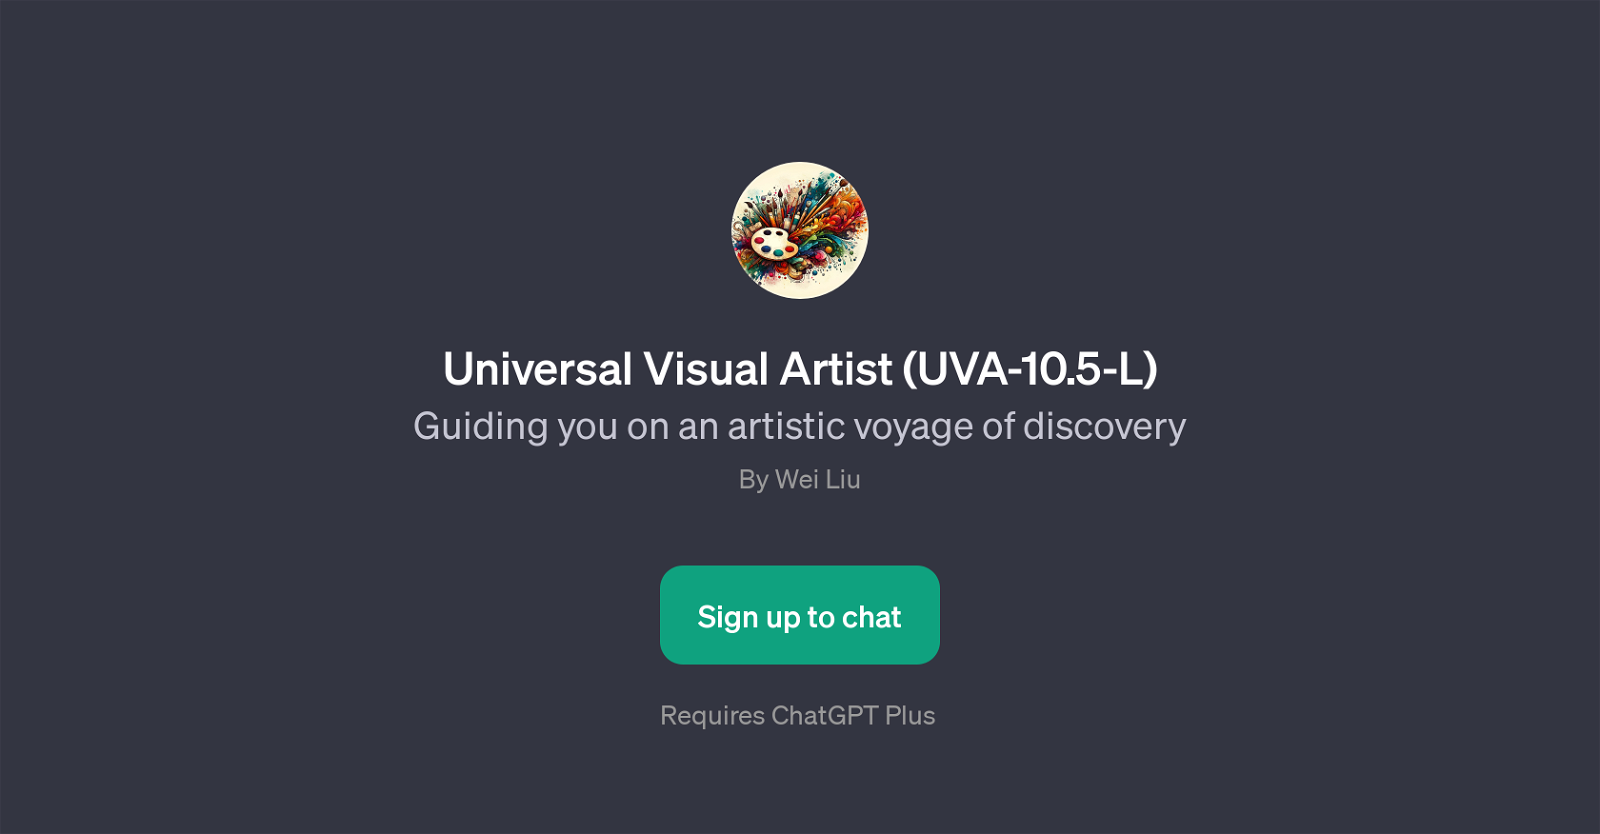 Universal Visual Artist (UVA-10.5-L) website